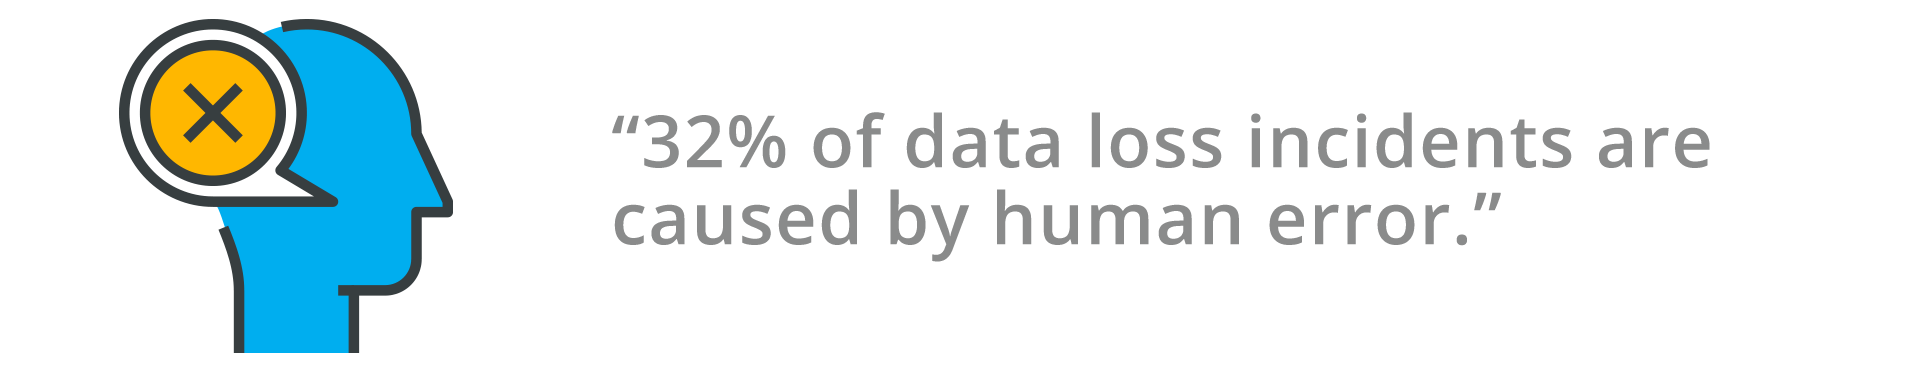 human error stat